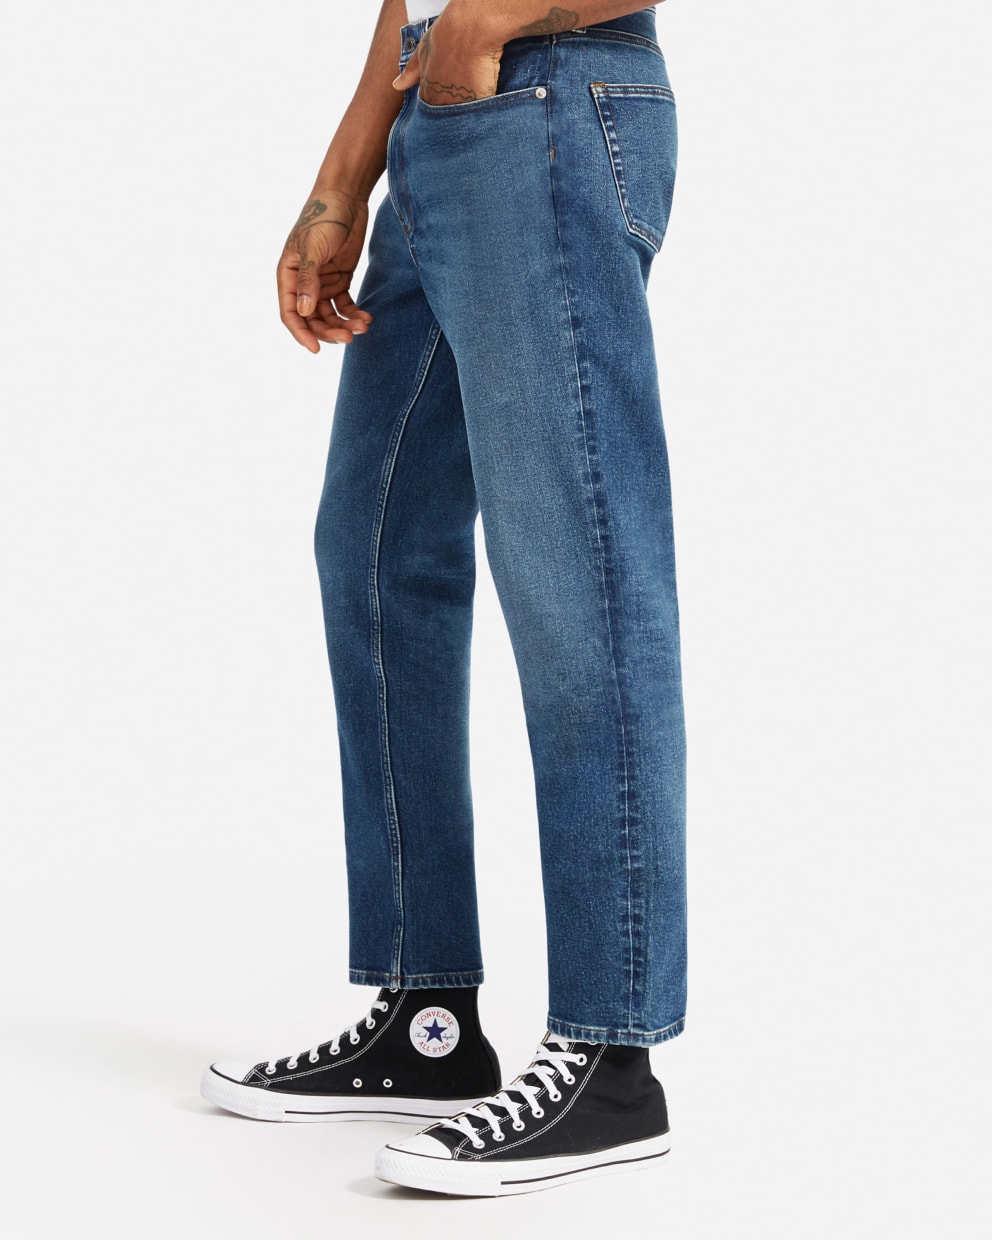 Men's Oversize Jeans, Men's Denim Clothing, Jeans Oversize Mens